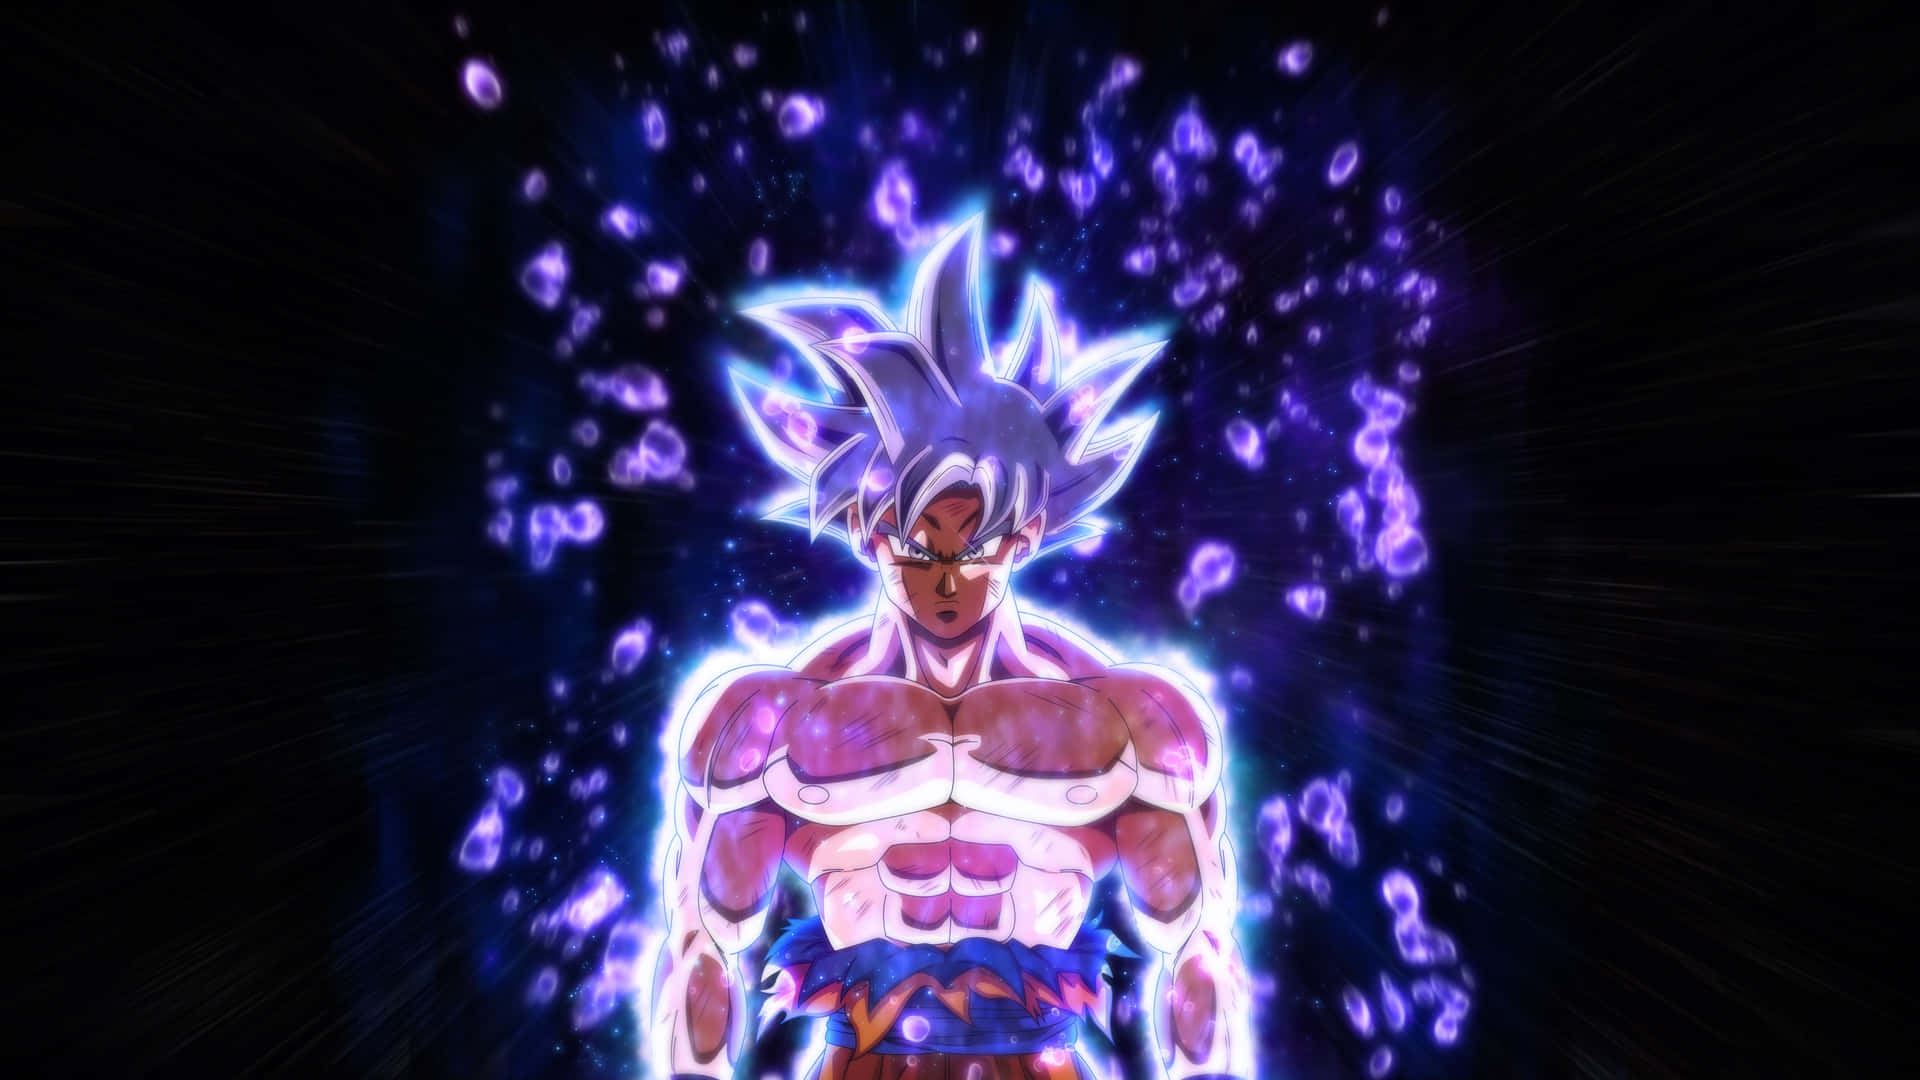 ¡desatandosu Poder! Goku En Ultra Instinct